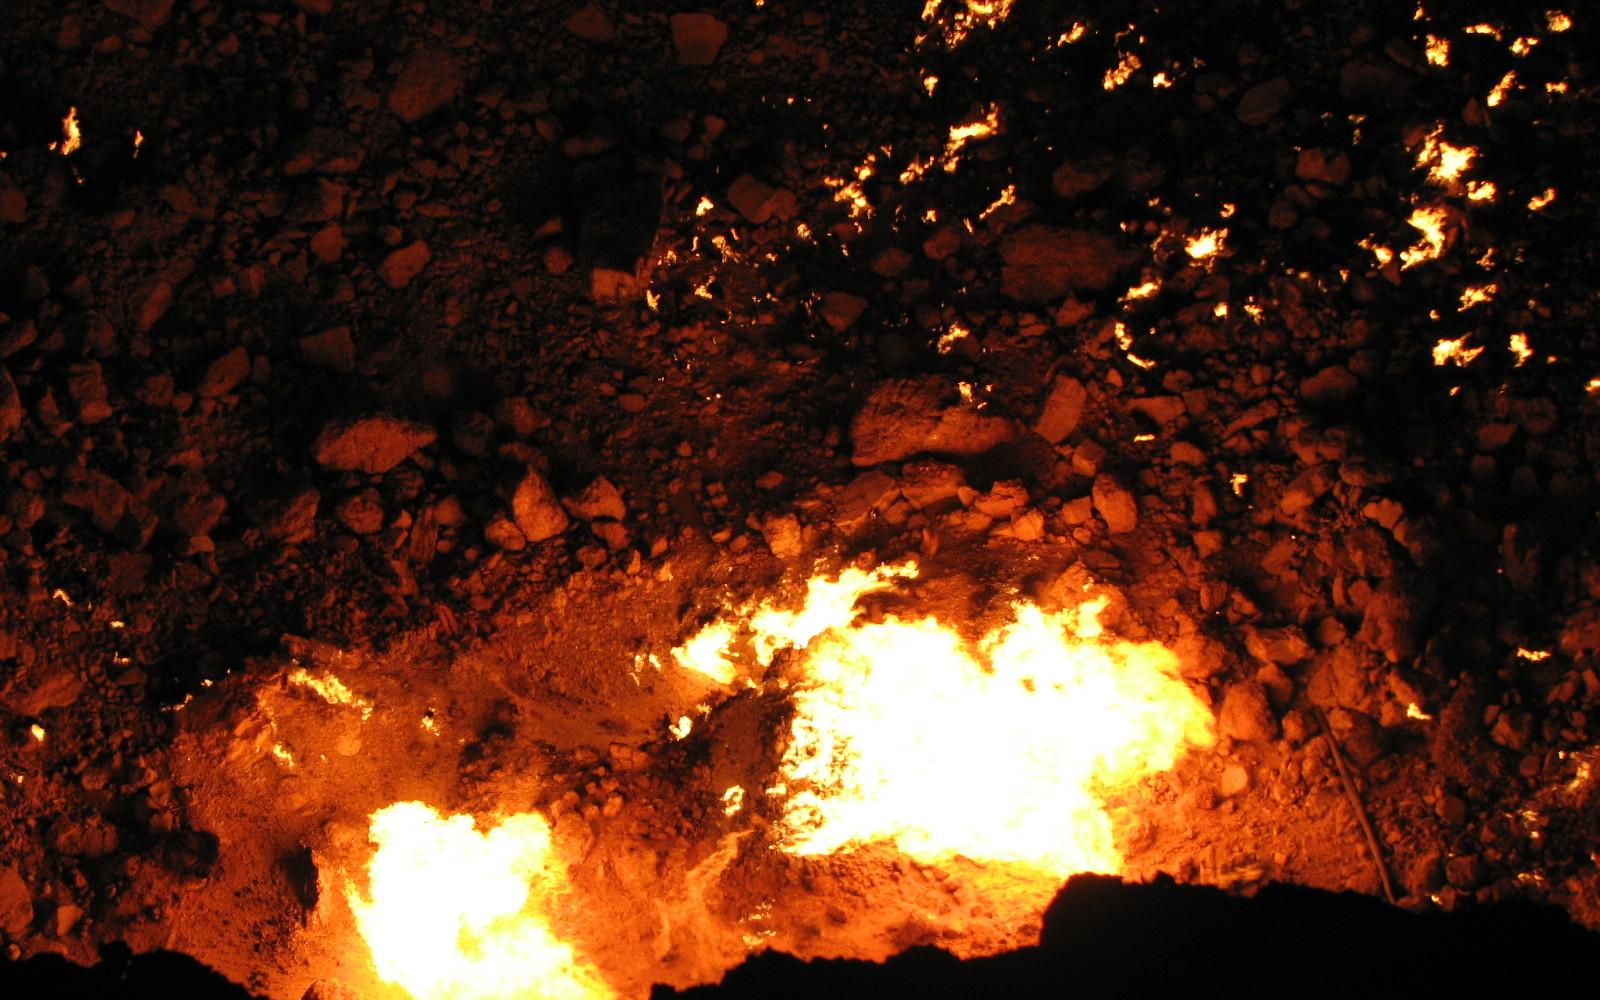 Пожары горючих газов. "Врата ада" (Дарваза), Туркменистан. Горящий кратер в Туркменистане врата ада. Газовый кратер врата ада Туркменистан. Туркменистан достопримечательности врата ада.